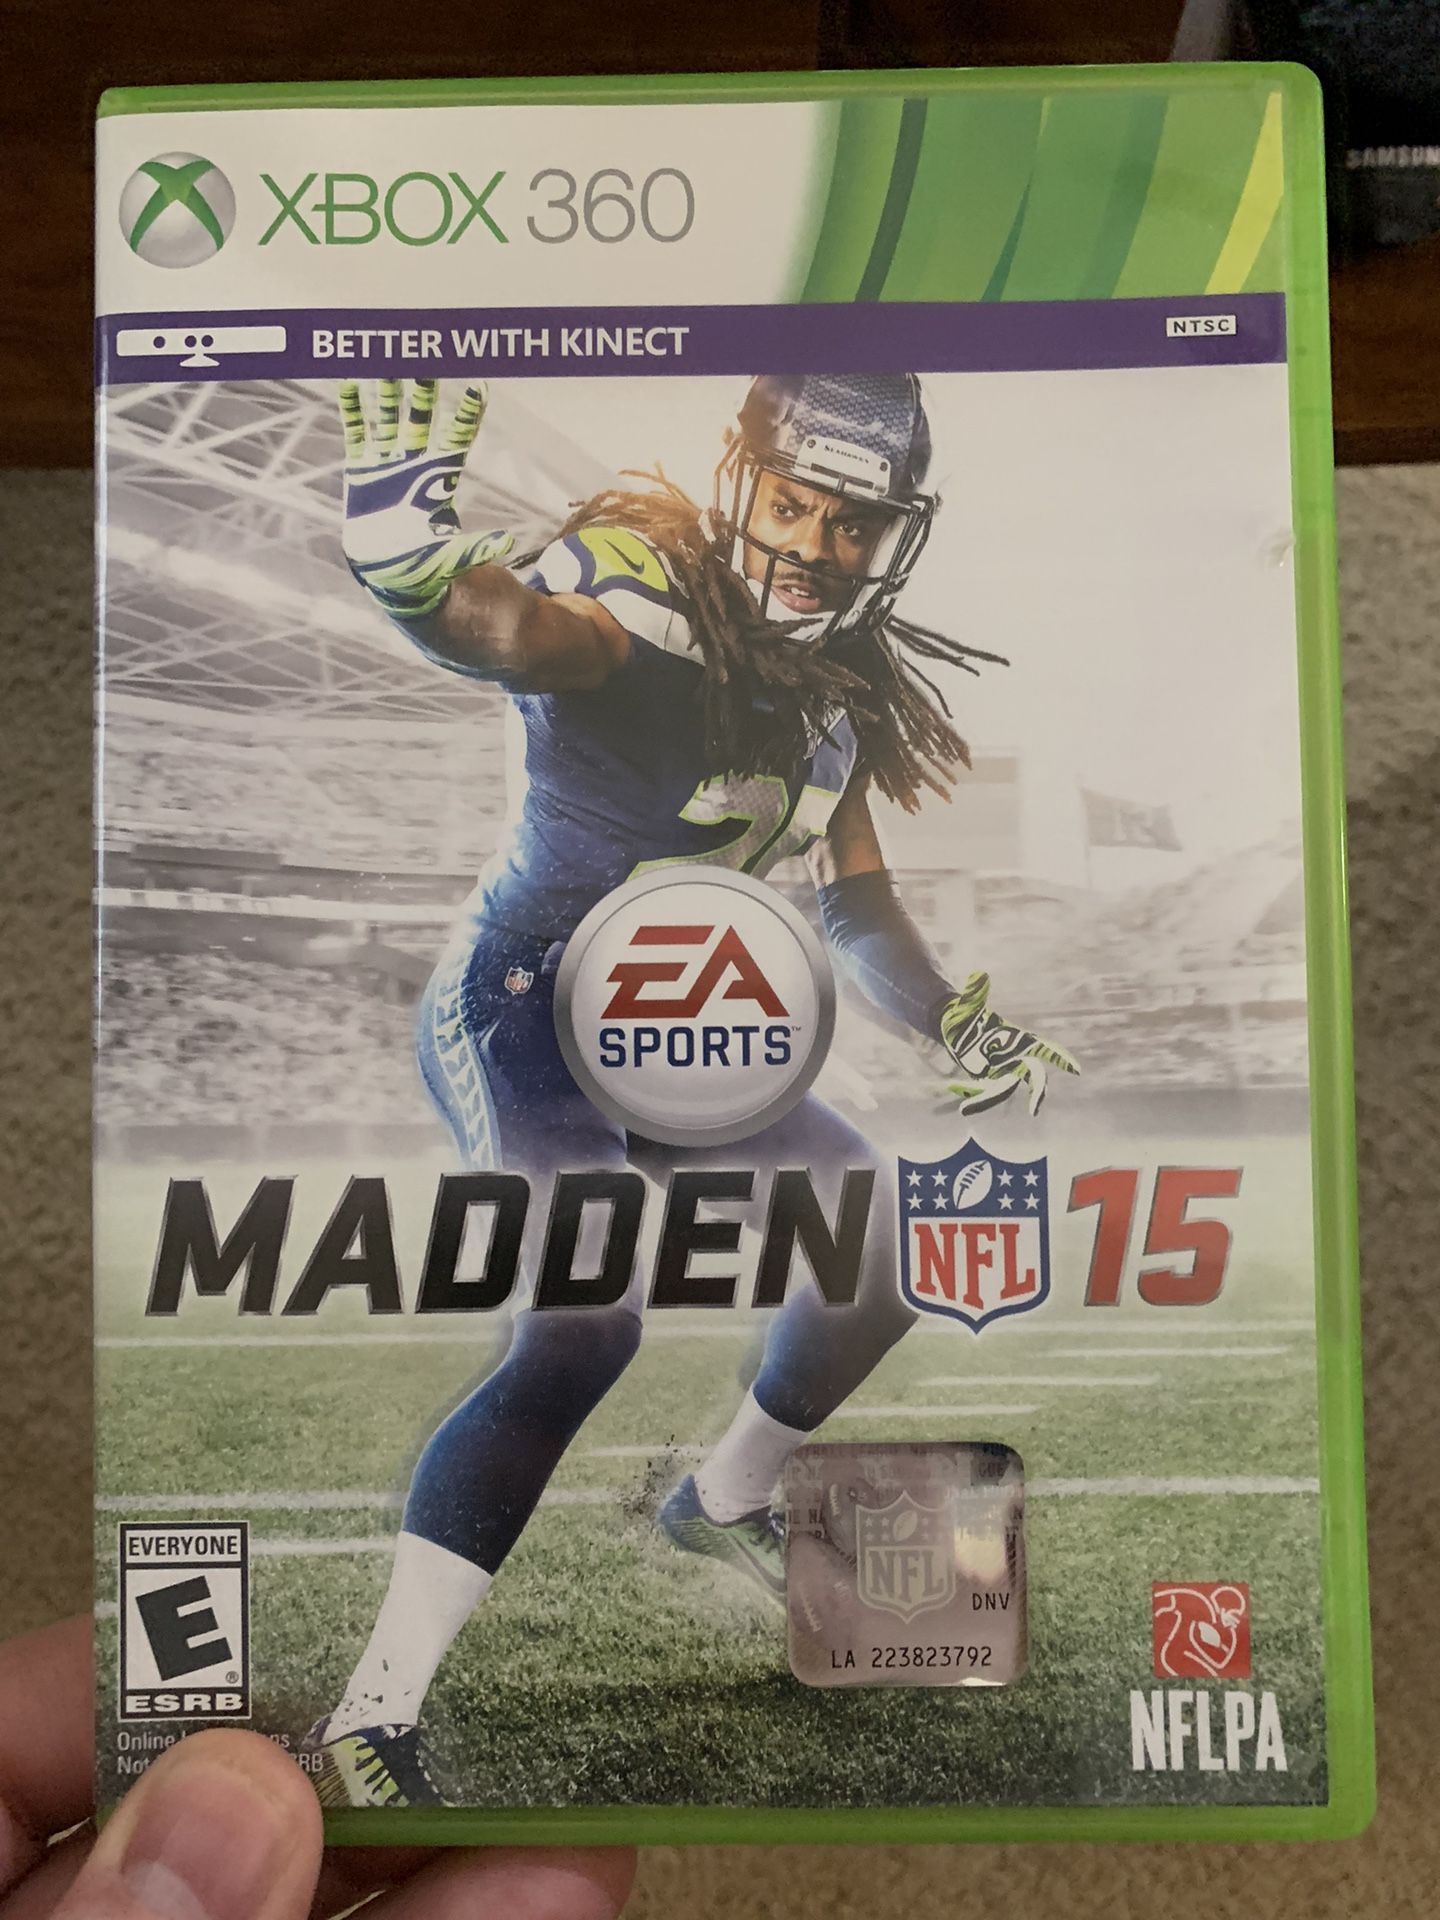 Madden NFL 15 - Xbox 360 Game